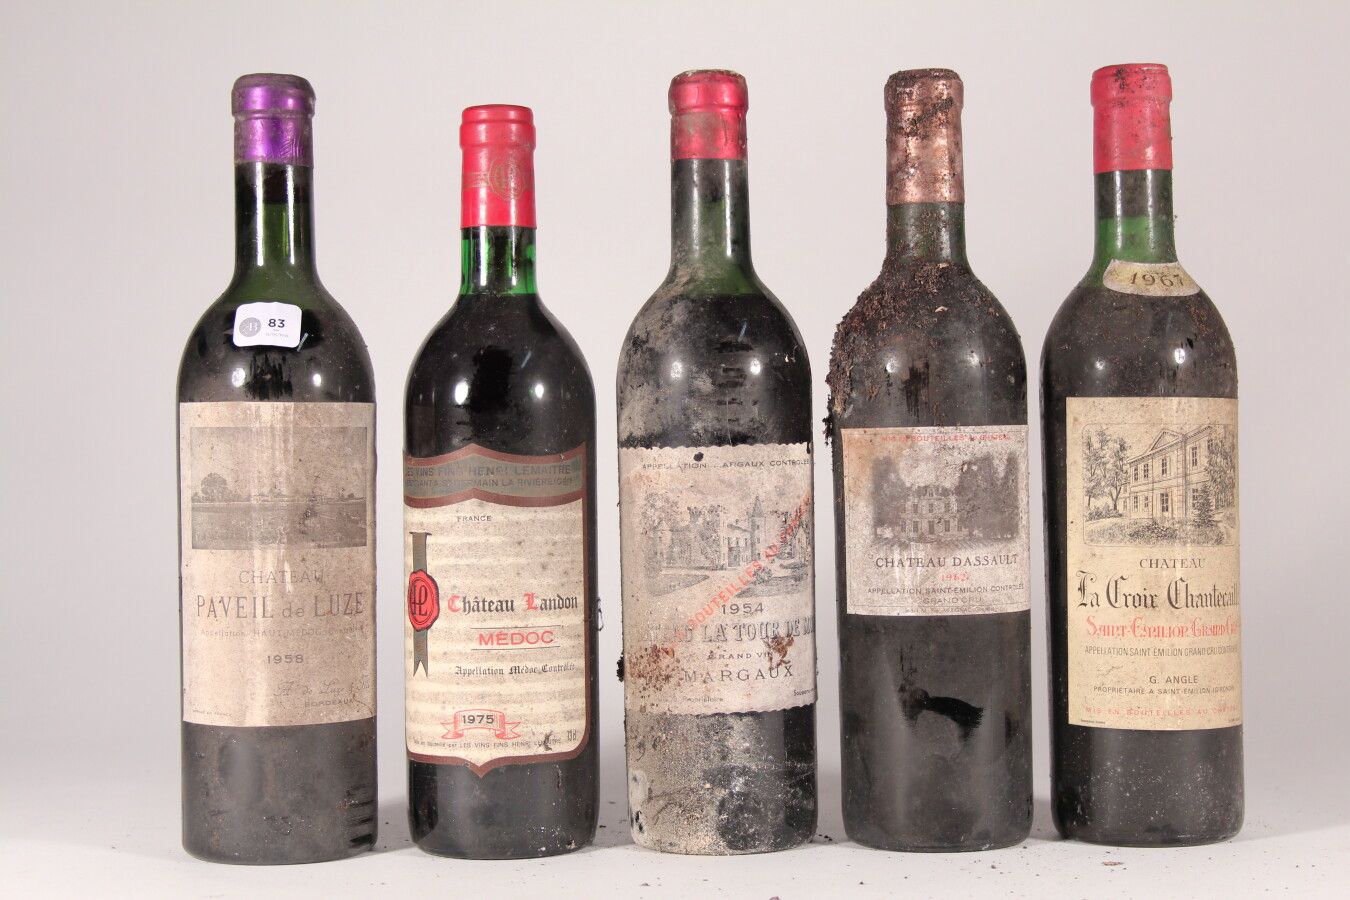 Null 1967 - La Croix Chantecaille

圣埃米利永 - 1瓶 (只是)

1975年--兰顿酒庄

梅多克 - 1瓶

1962年&hellip;